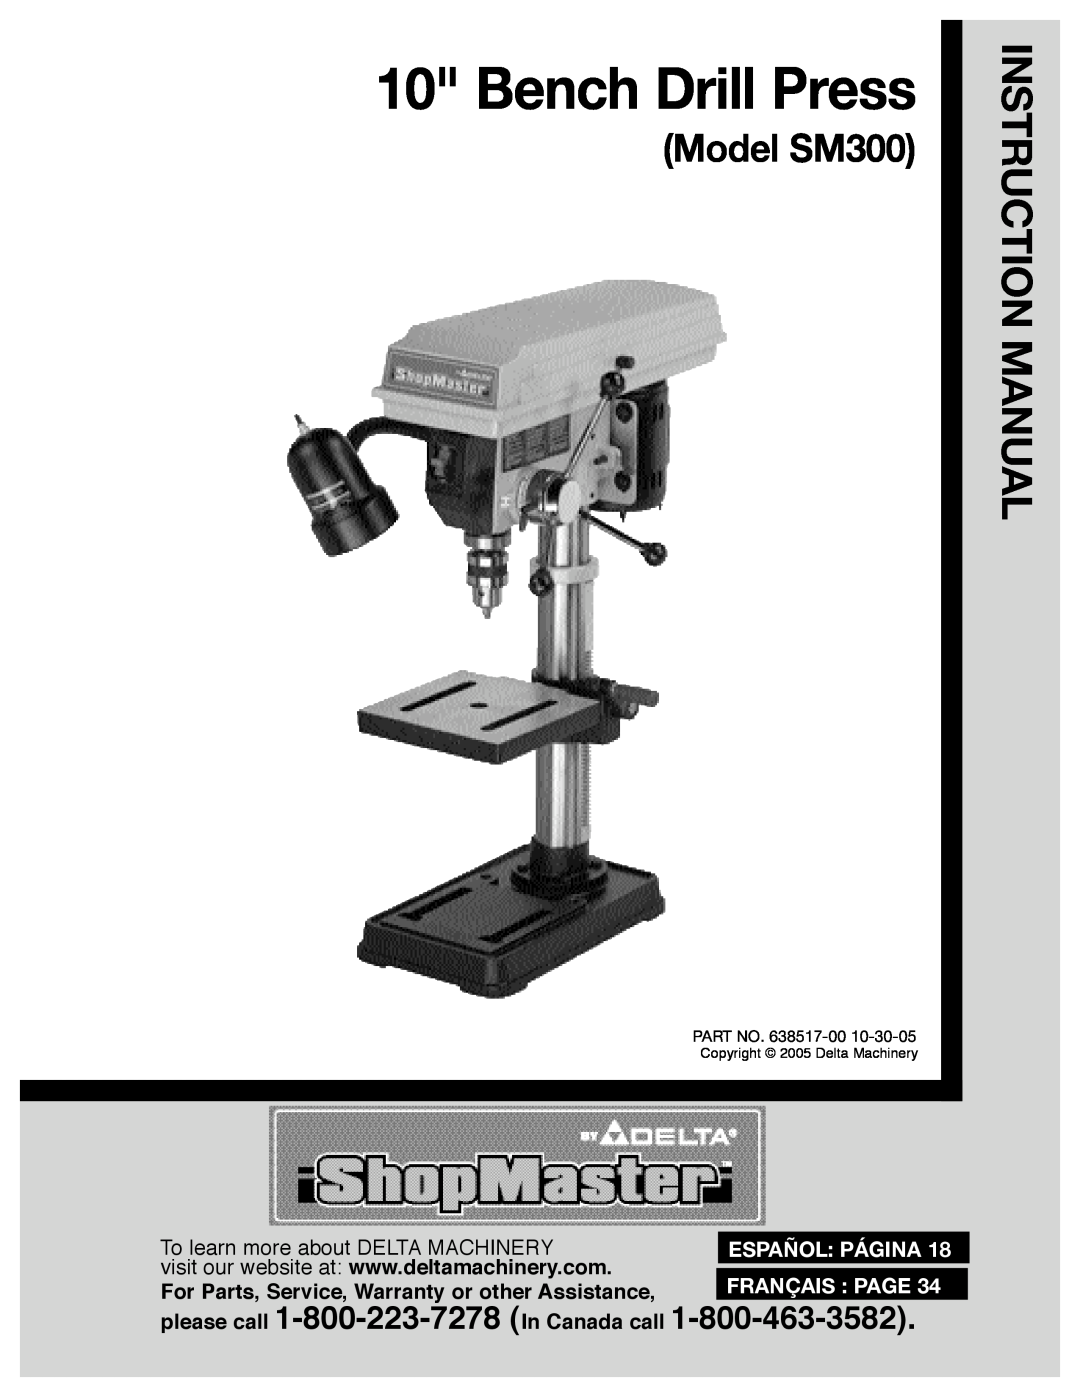 Delta 638517-00 warranty Model SM300, Bench Drill Press, please call 1-800-223-7278 In Canada call, Español Página 